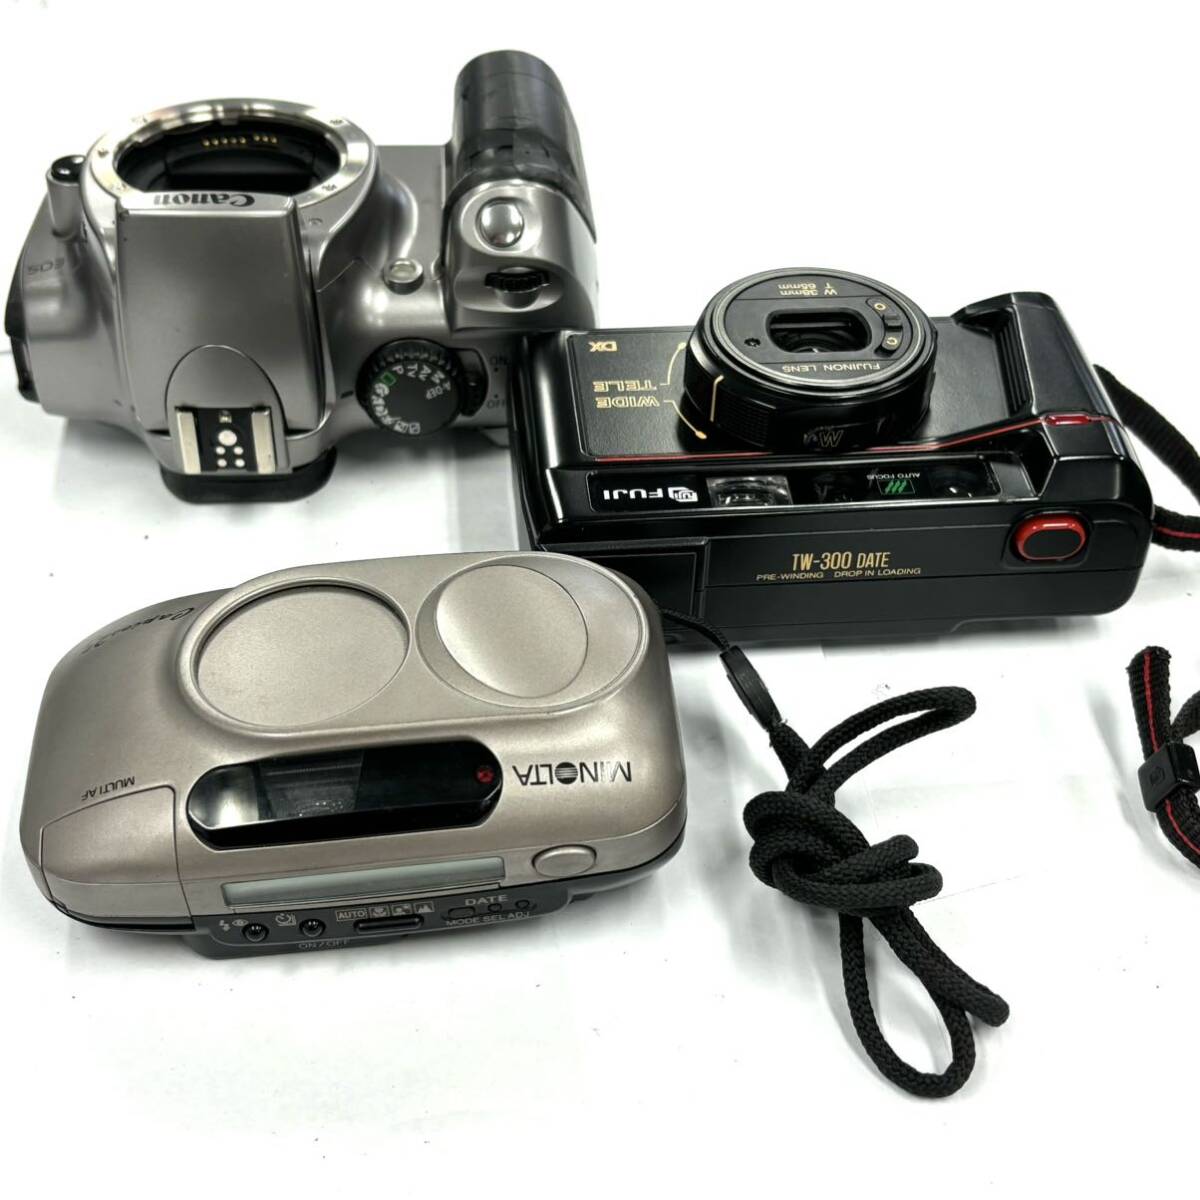 H2906 カメラ まとめ フィルムカメラ デジタルカメラ Canon キヤノン EOS Kiss DS6041 FUJI TW-300 DATE MINOLTA ミノルタ Capios25 中古の画像7